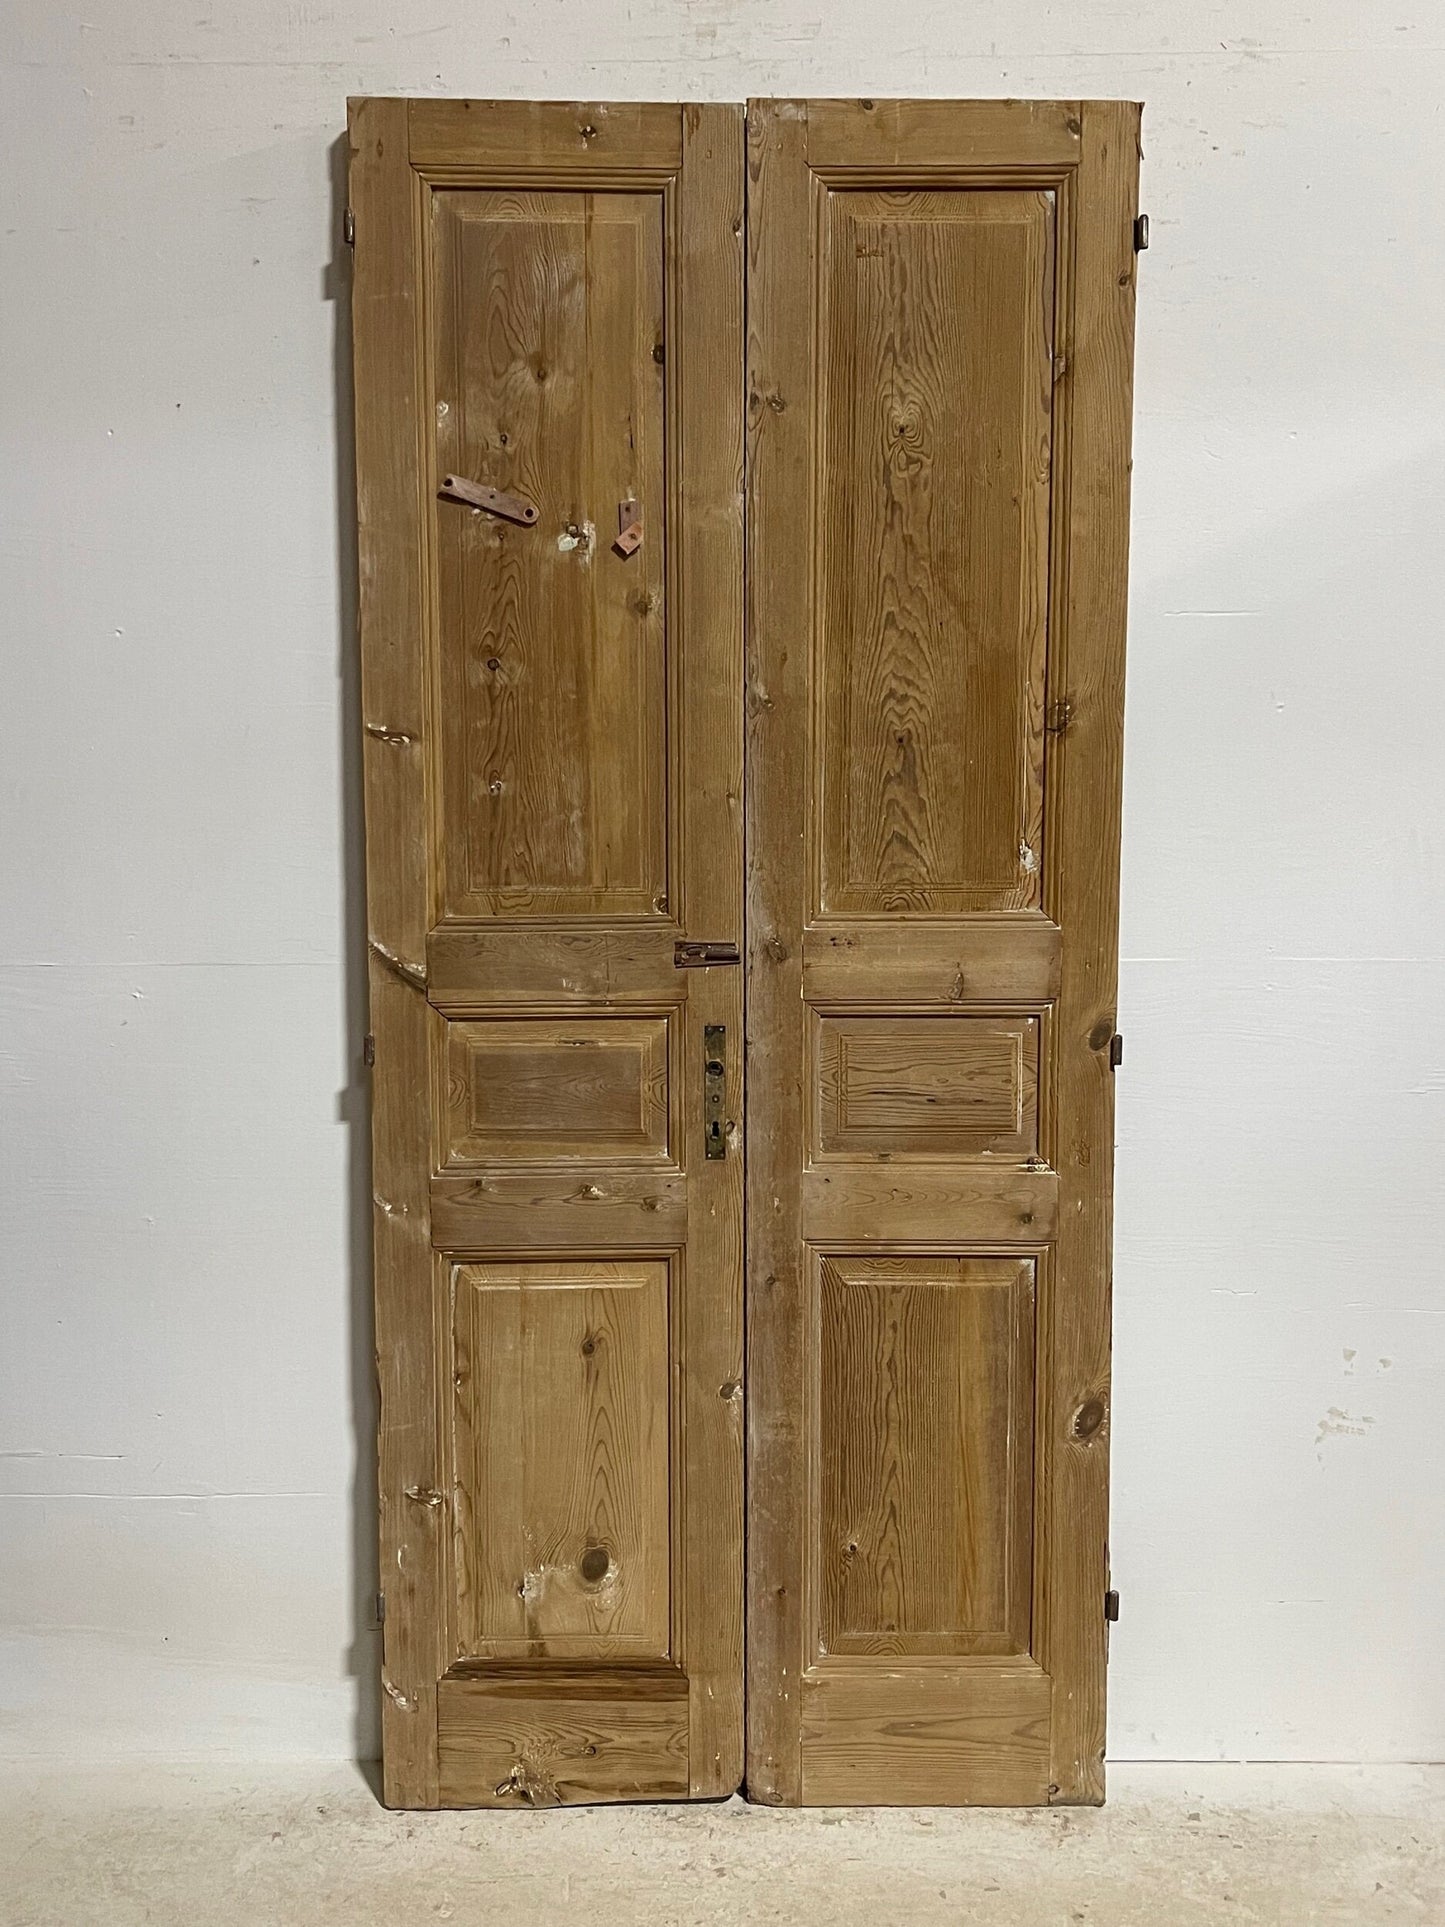 Antique French doors (93.25x41.25) H0092s